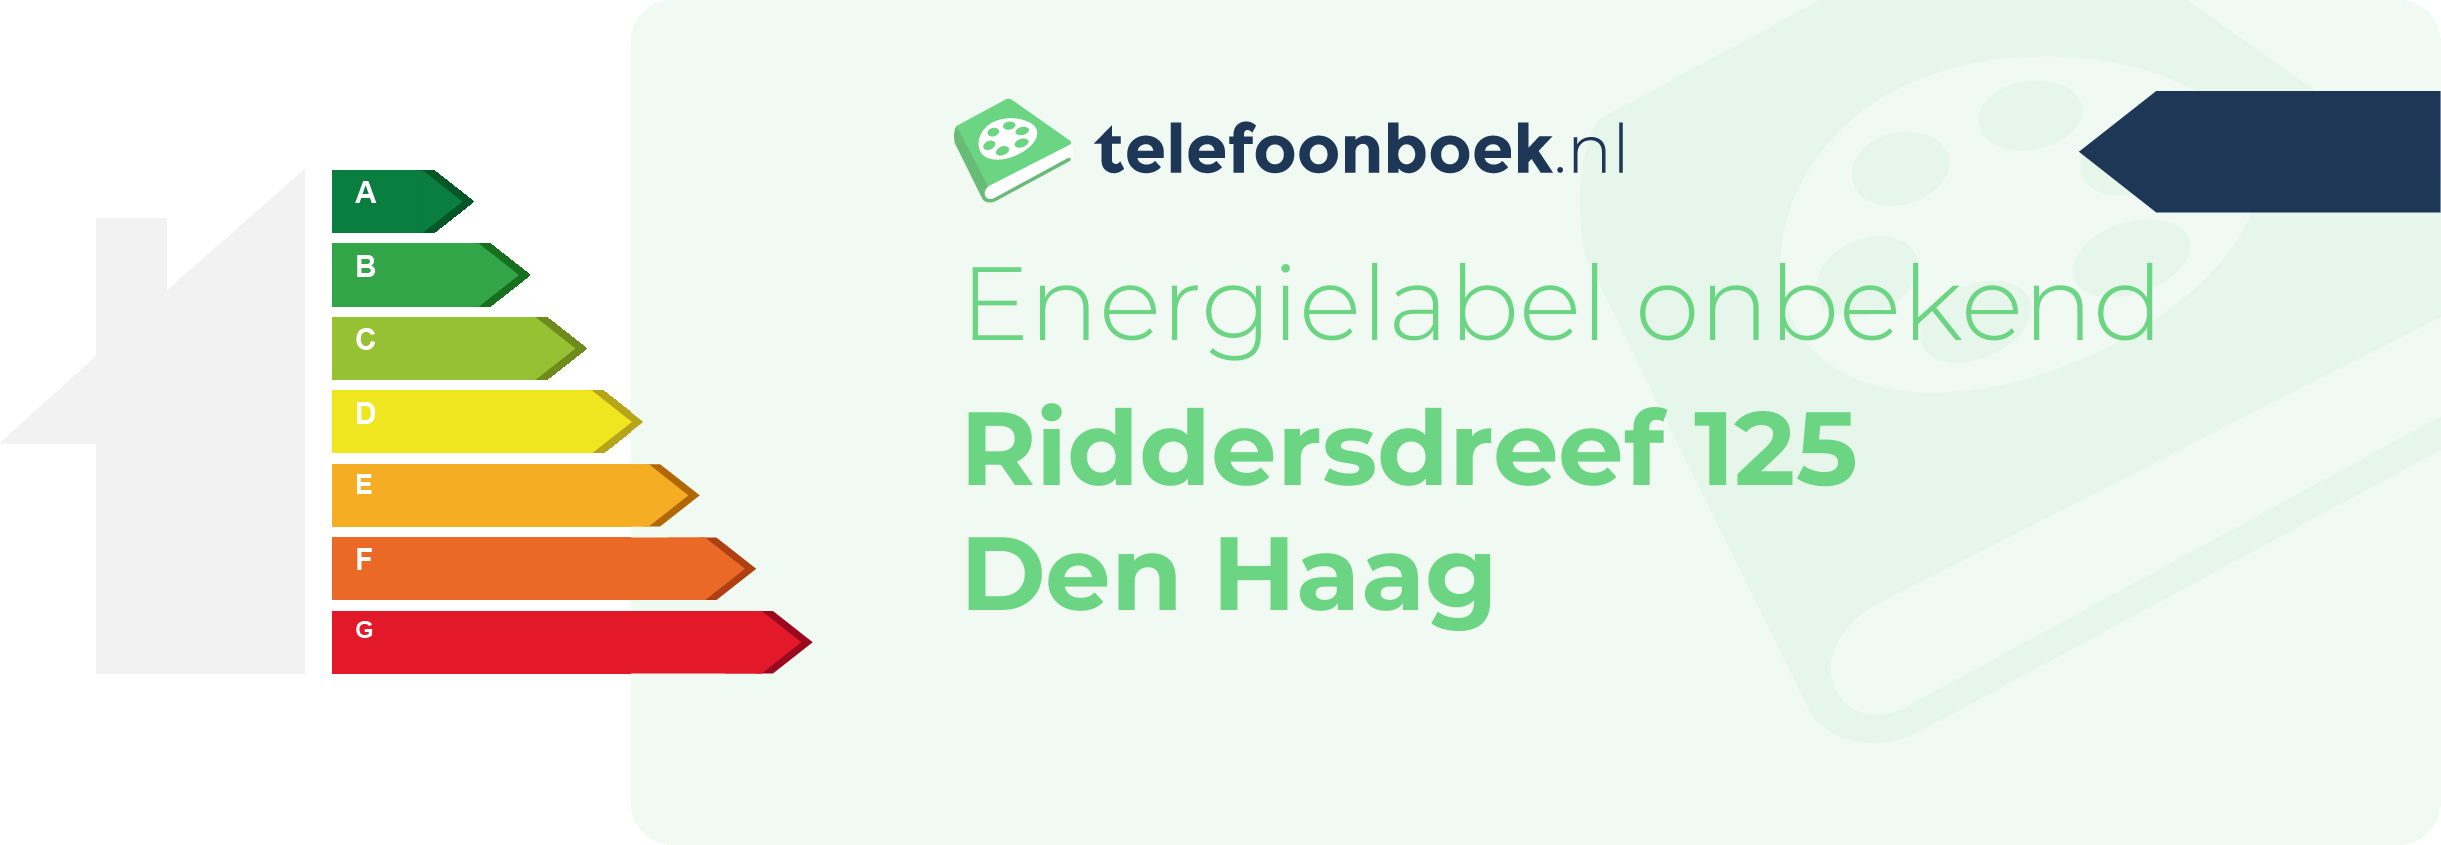 Energielabel Riddersdreef 125 Den Haag